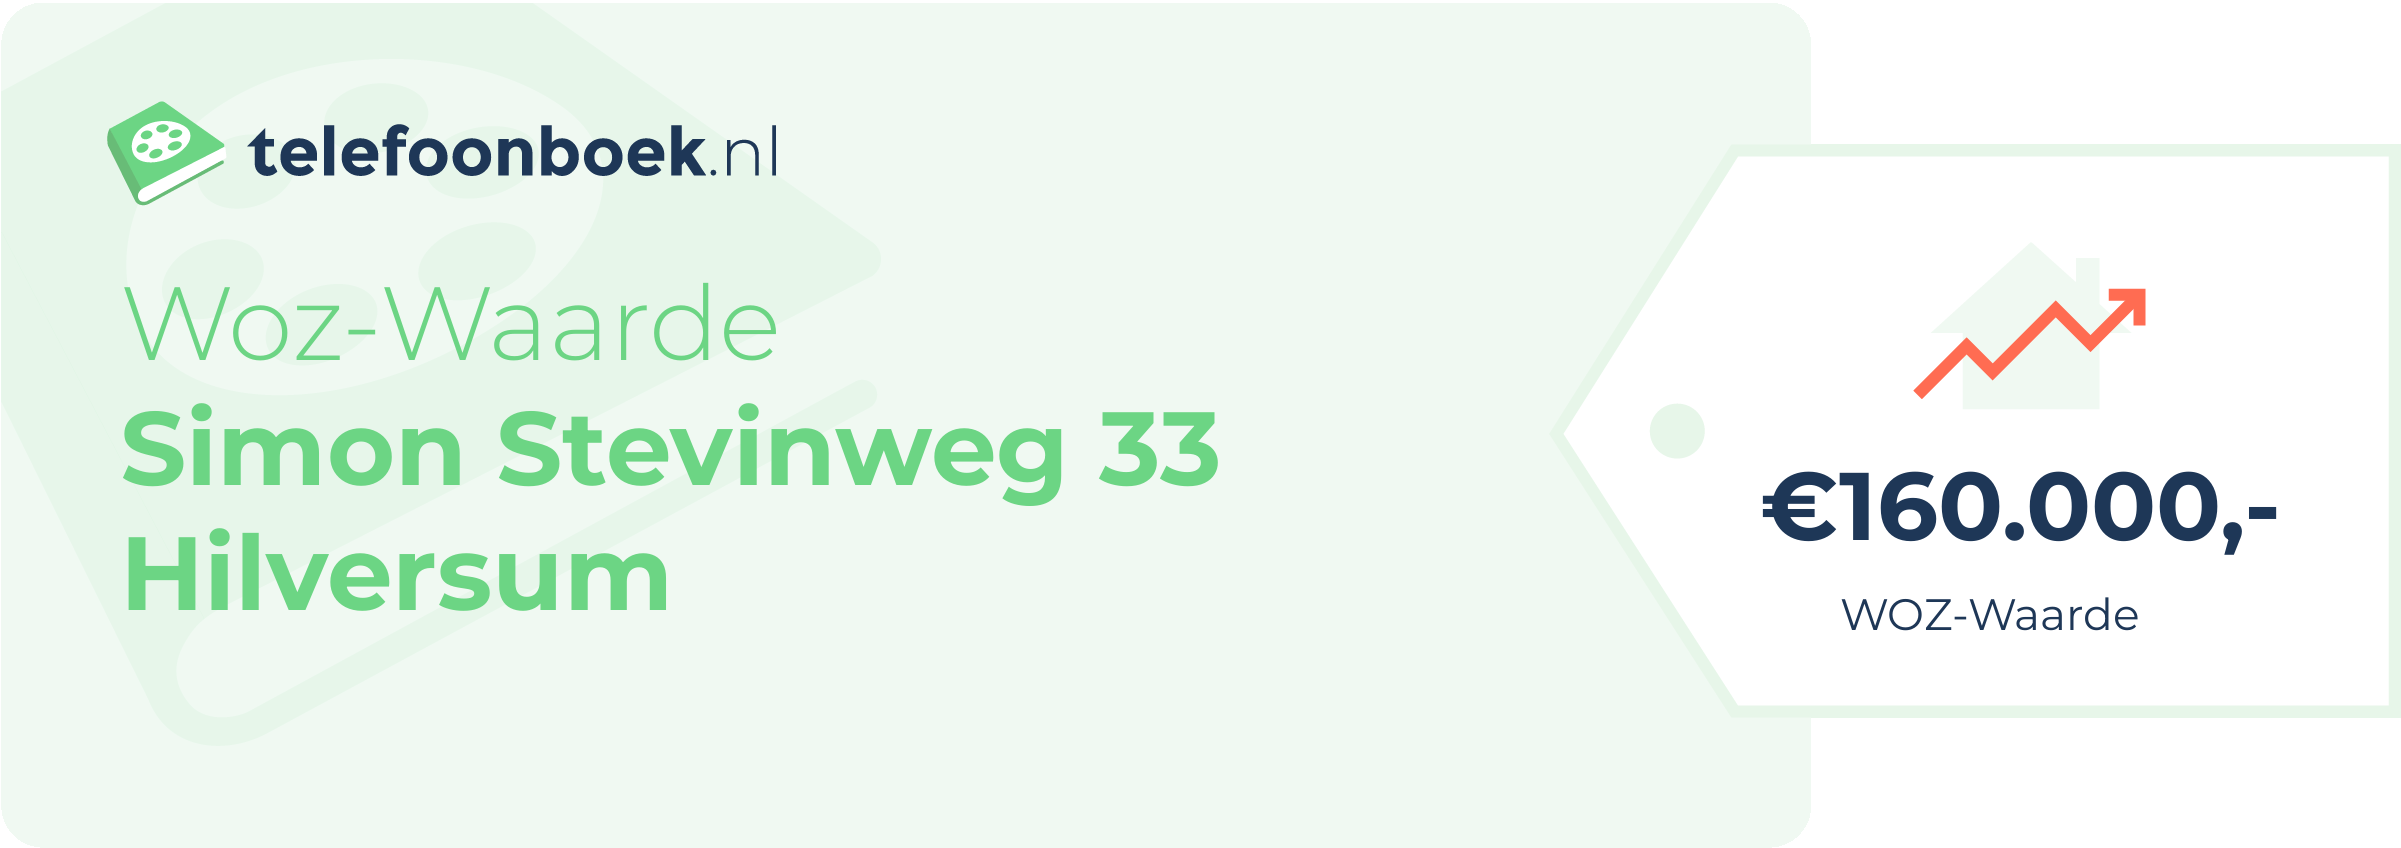 WOZ-waarde Simon Stevinweg 33 Hilversum